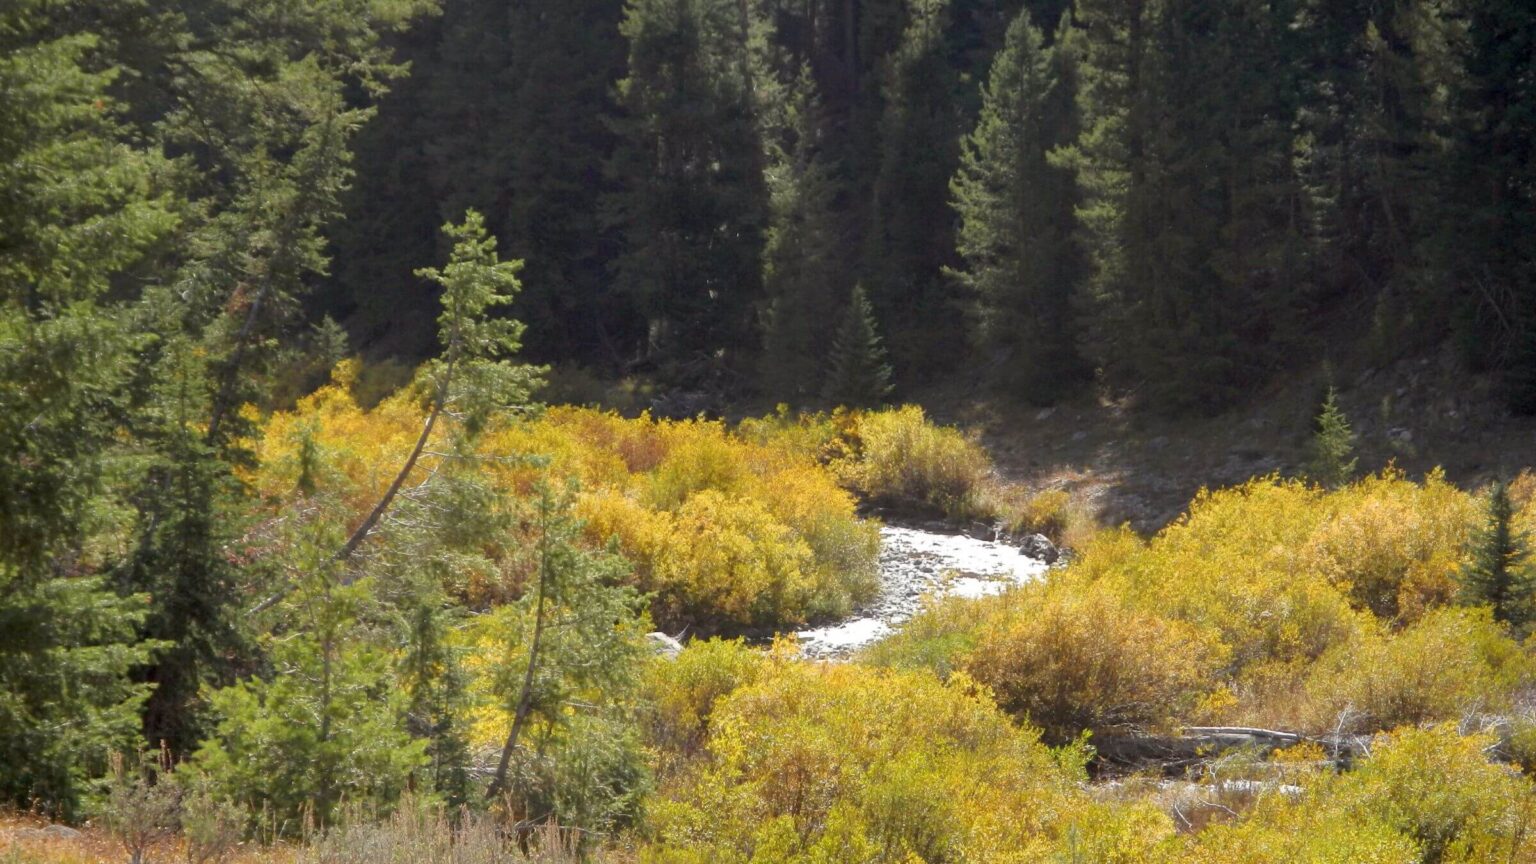 Hemingway-Boulders Wilderness, North Fork-Big Wood River: fall-color willows, September